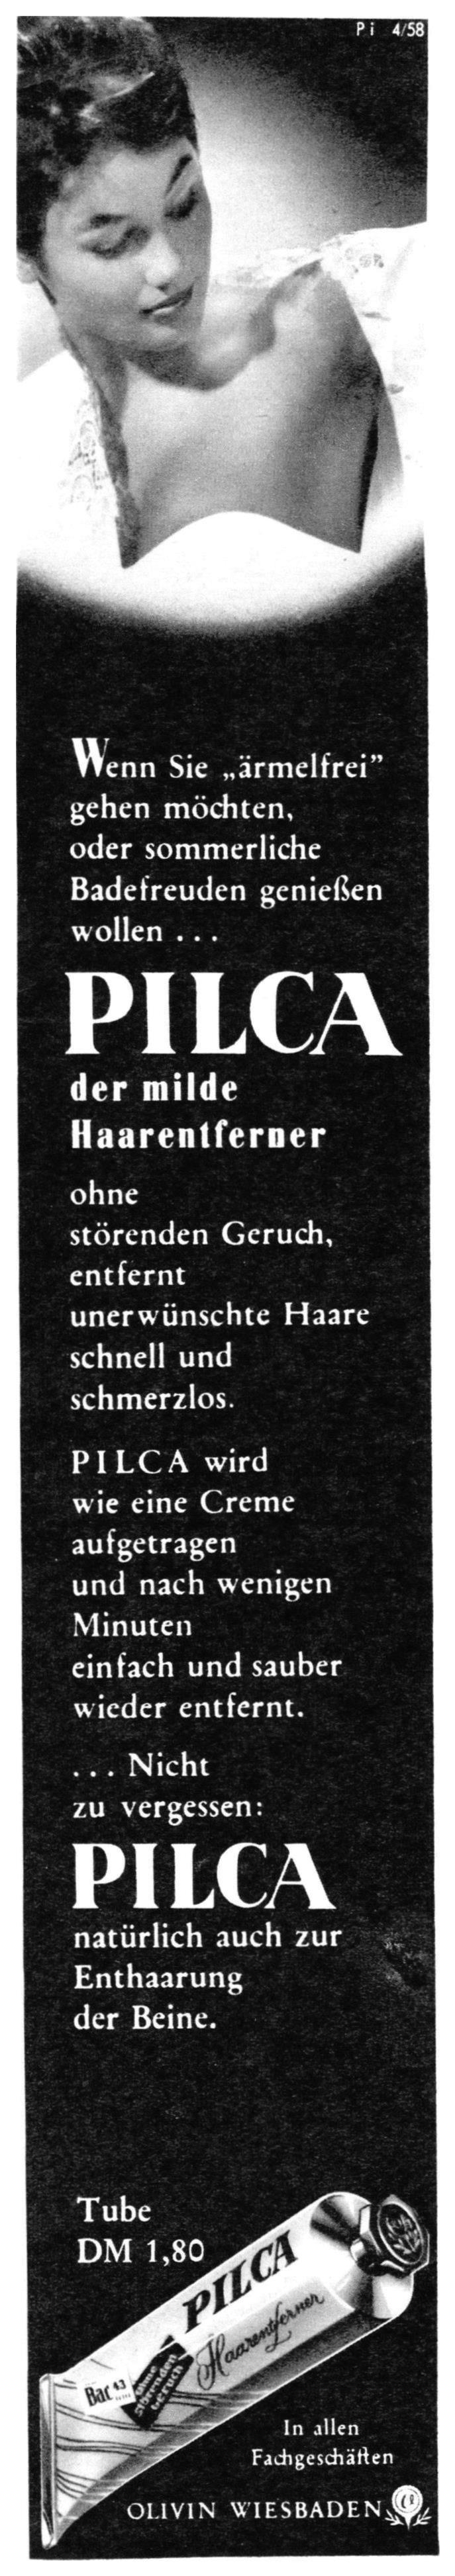 Pilca 1958 0.jpg